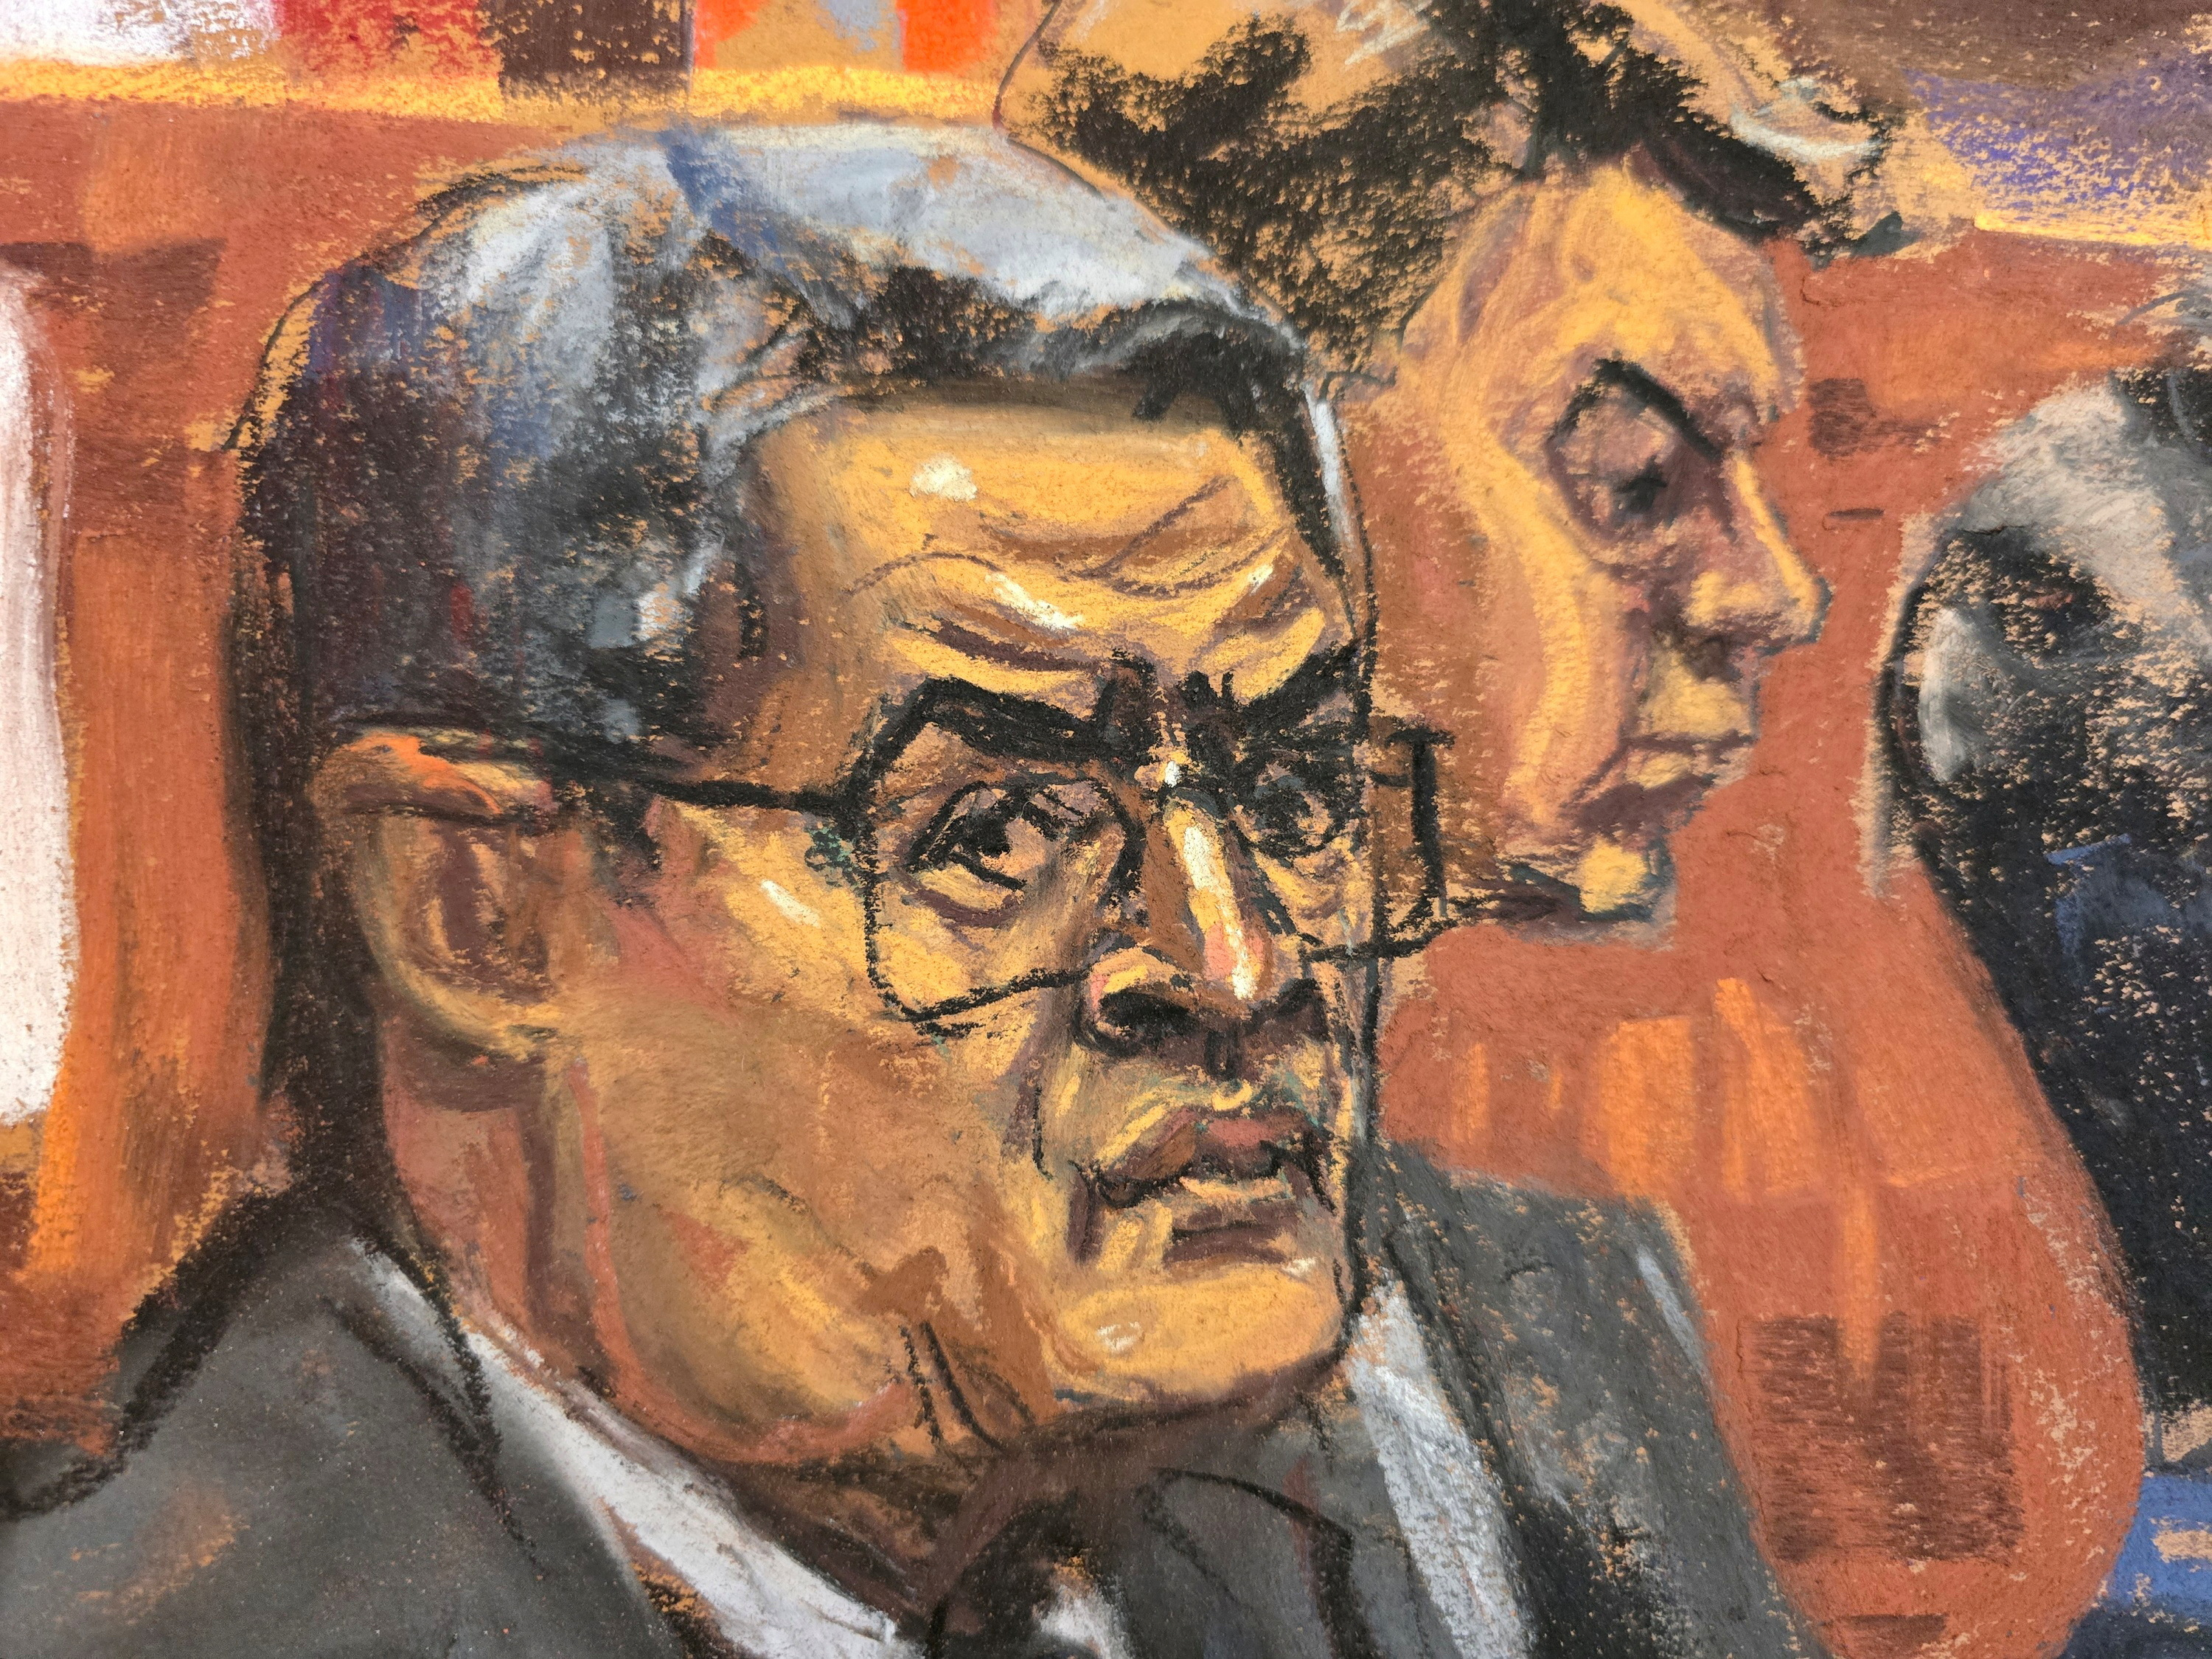 Honduras ex-President Hernandez is shown in a sketch at a trial